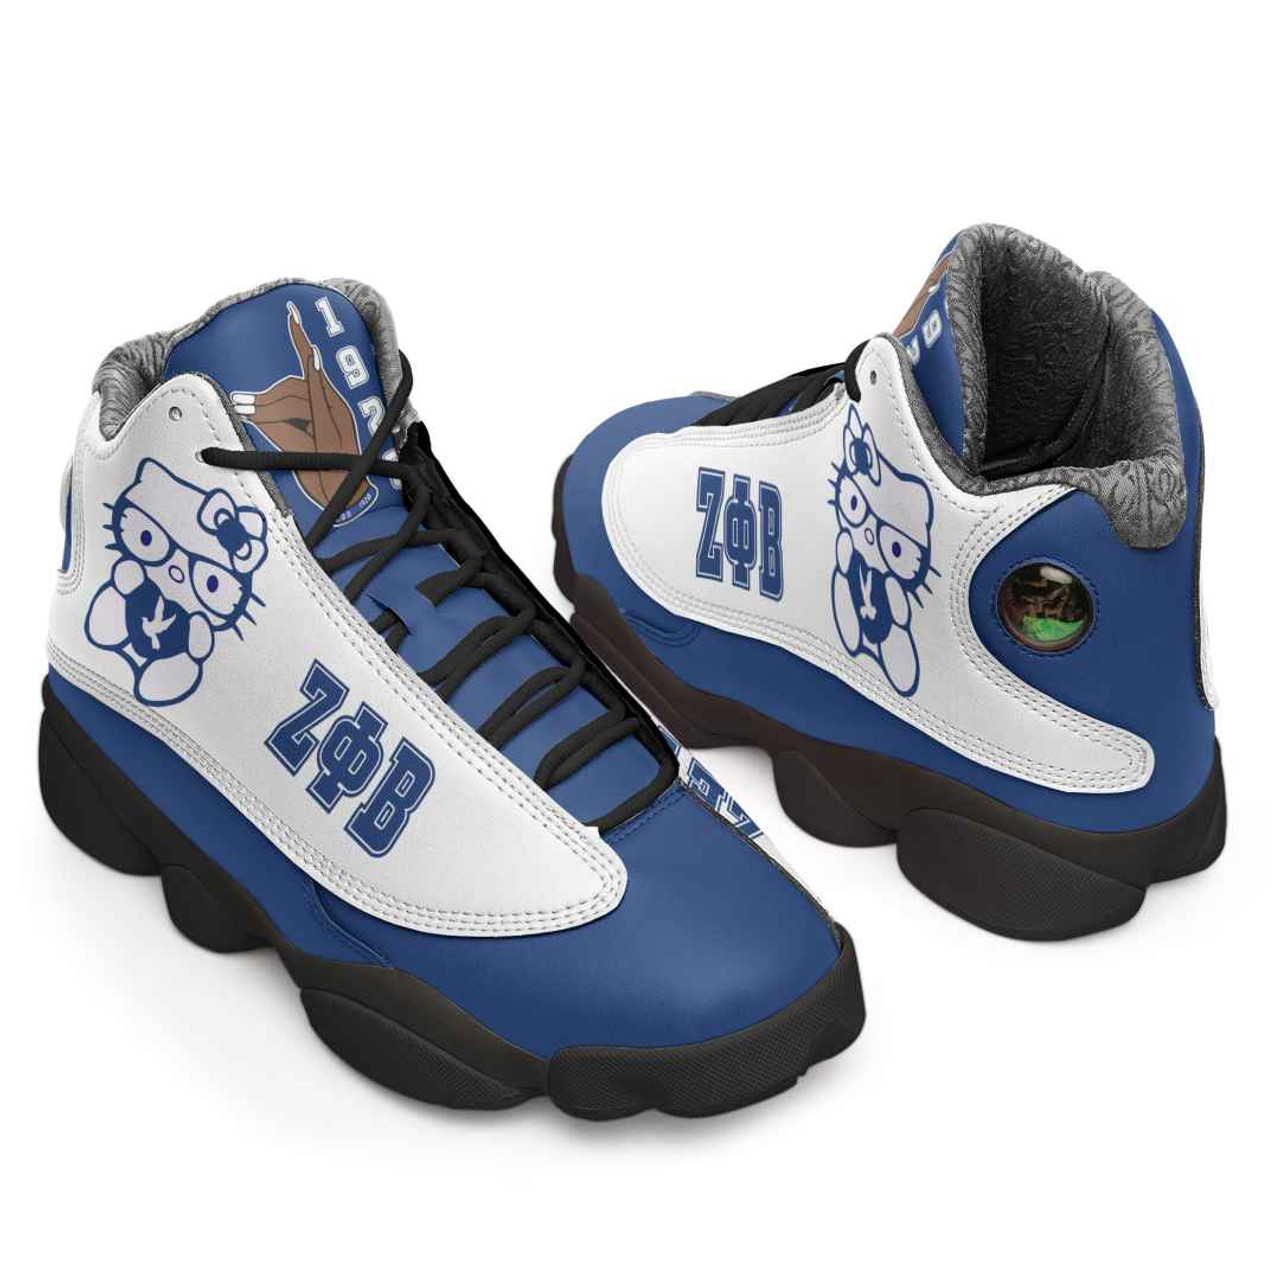 Zeta Phi Beta High Top Basketball Shoes J 13 - Sorority Cat With Hand Gesture High Top Sneakers J 13